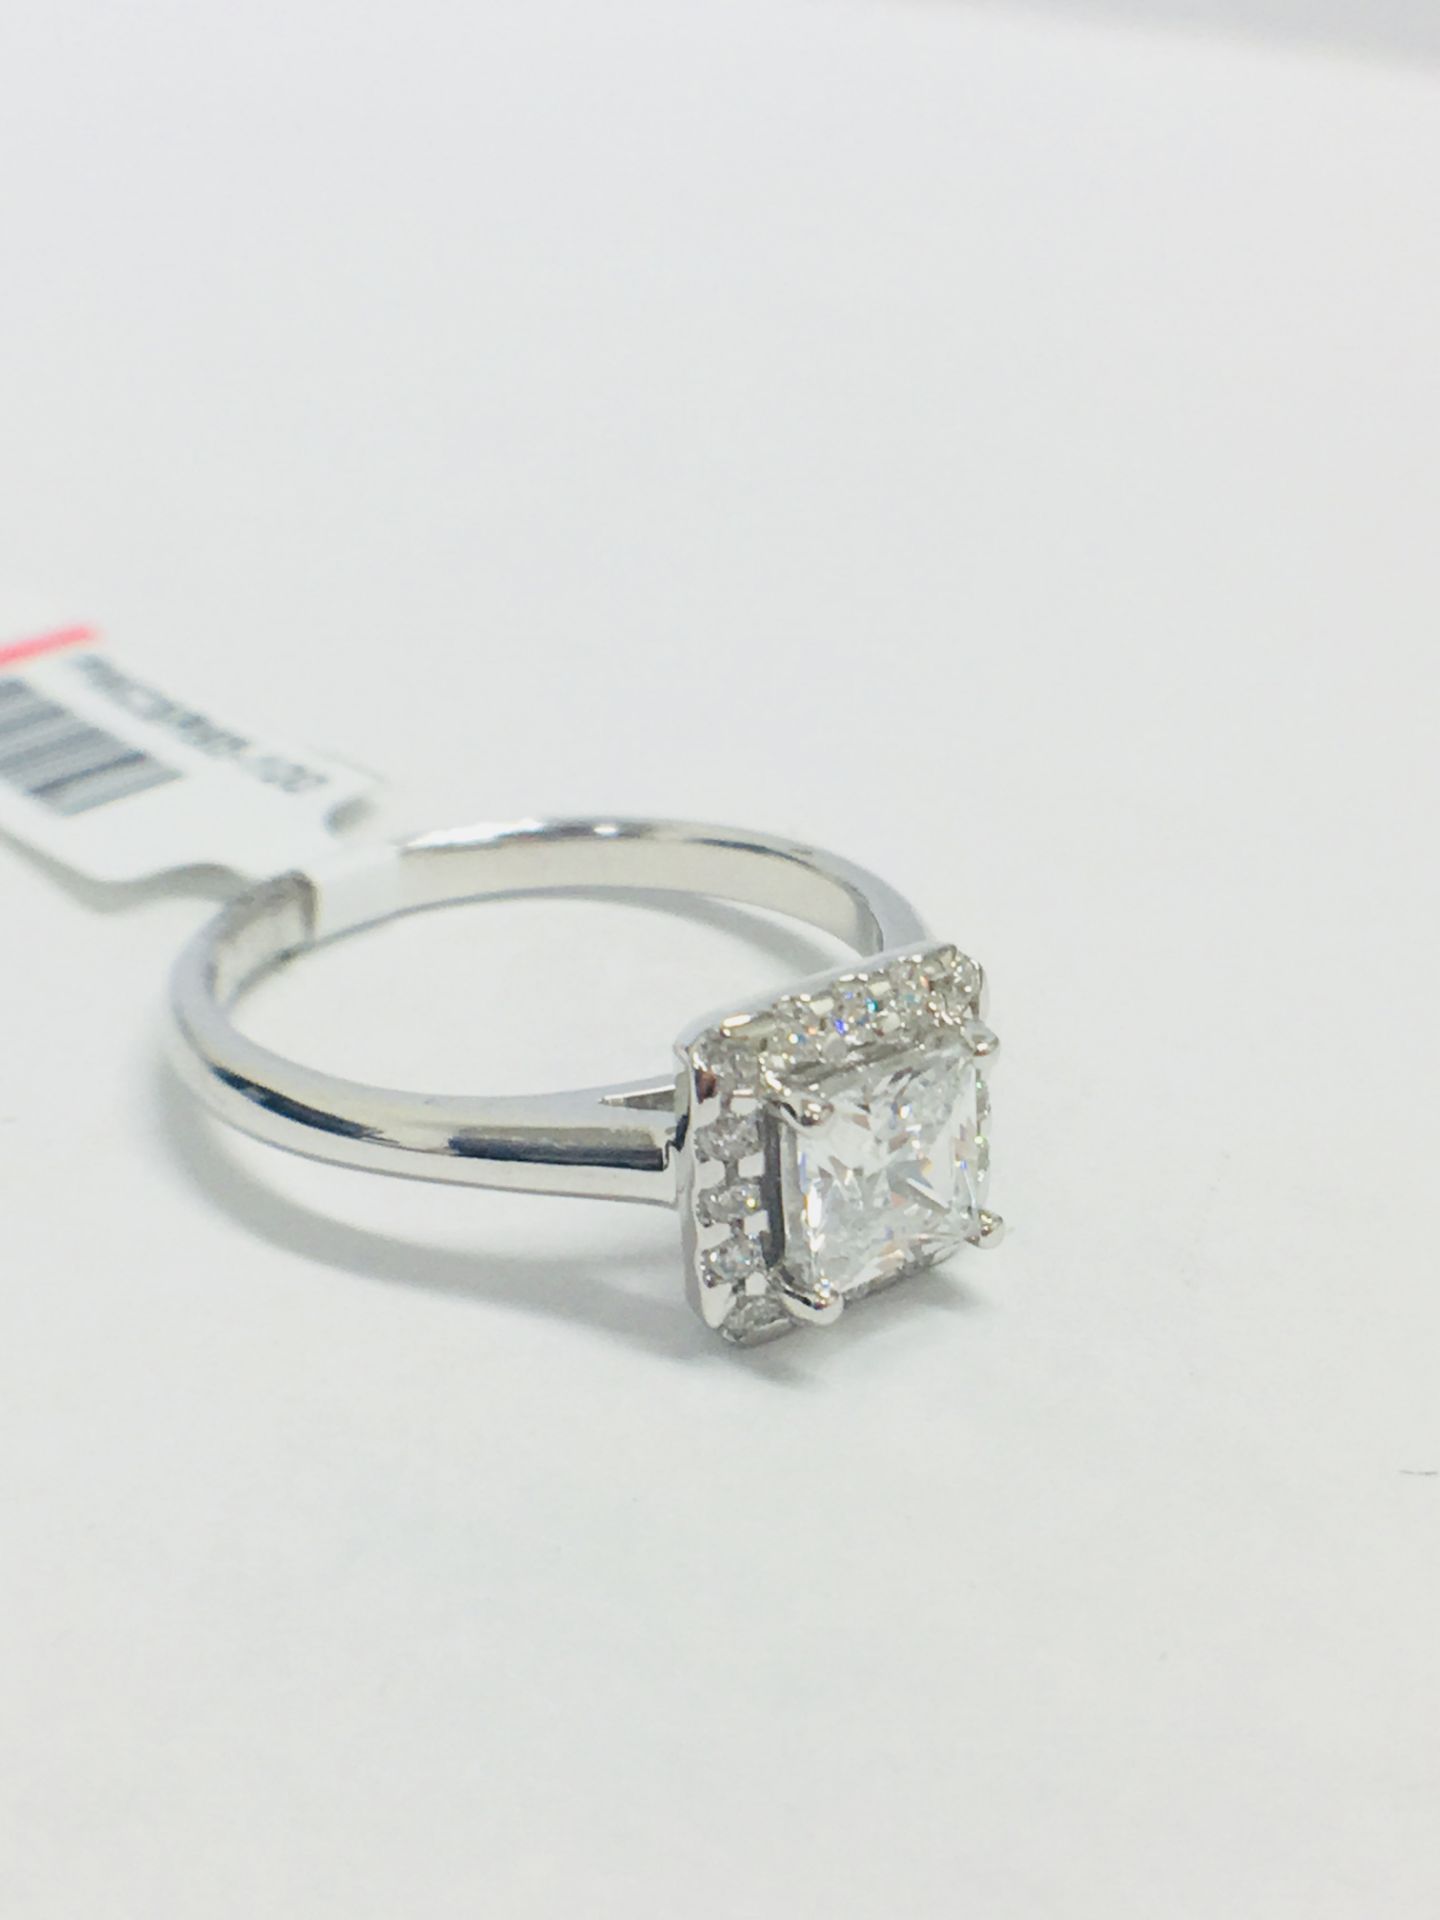 Platinum Princess cut Diamond Ring,1ct Princess cut natural diamond,h colour,si1 clarity,16 round - Image 7 of 8